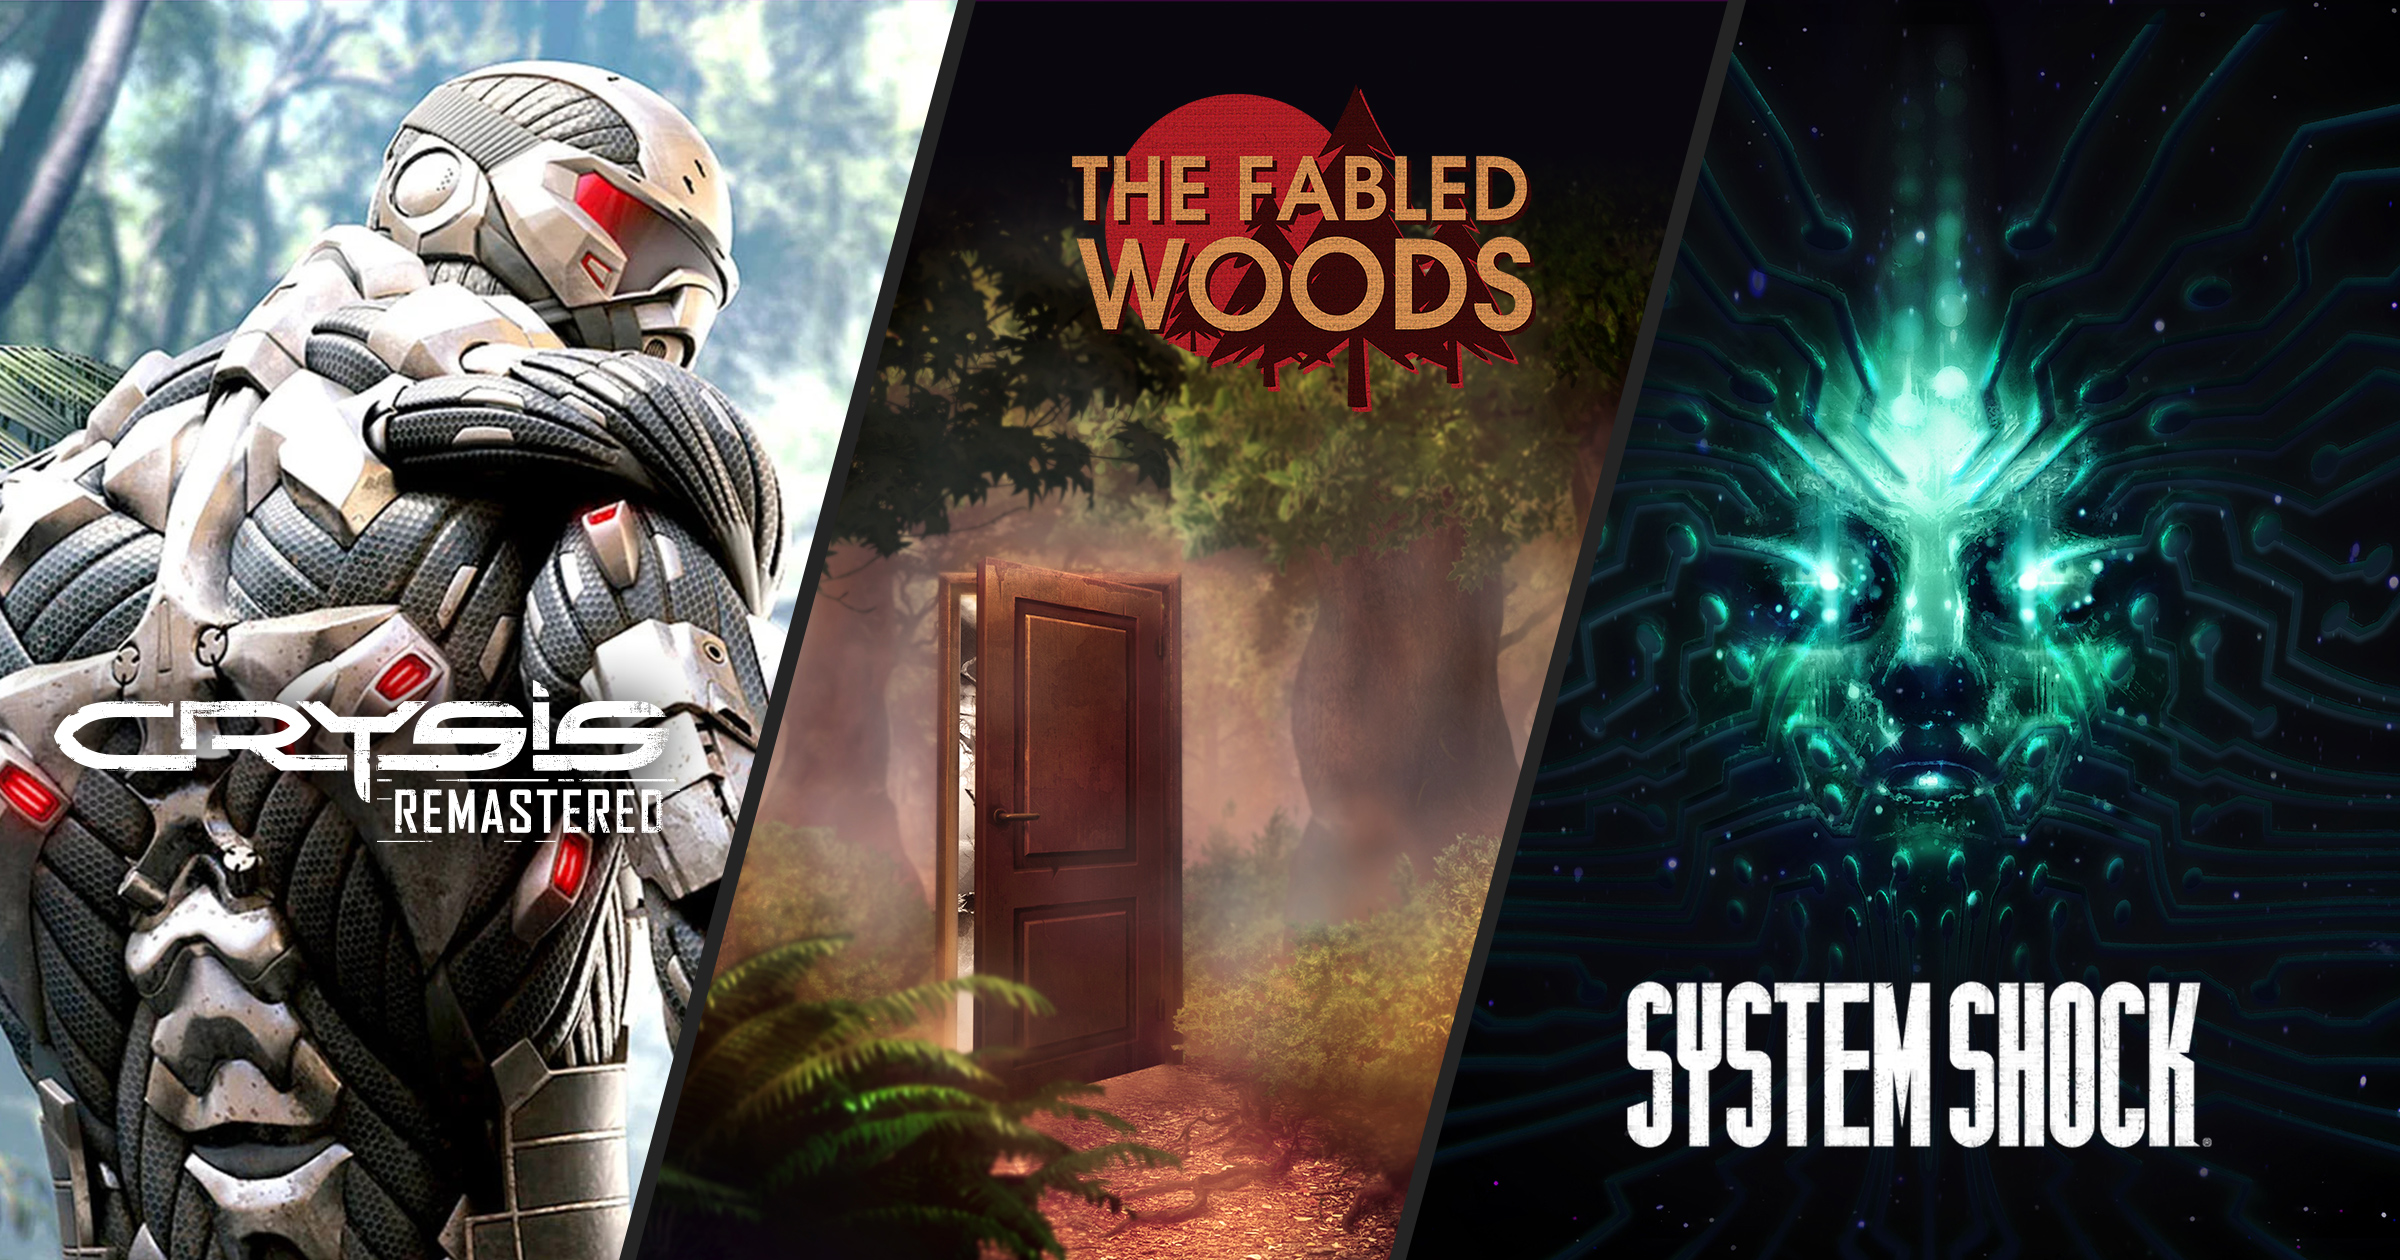 march 2021 nvidia geforce rtx dlss games key visual Nvidia ประกาศนักพัฒนาสามารถใช้งาน DLSS ผ่านปลั๊กอินสำหรับ Unreal Engine 4.26 (UE4) ได้แล้วในเกมส์ The Fabled Woods , System Shock และ Crysis Remastered ช่วยเพิ่มประสิทธิภาพกราฟฟิกมากยิ่งขึ้น